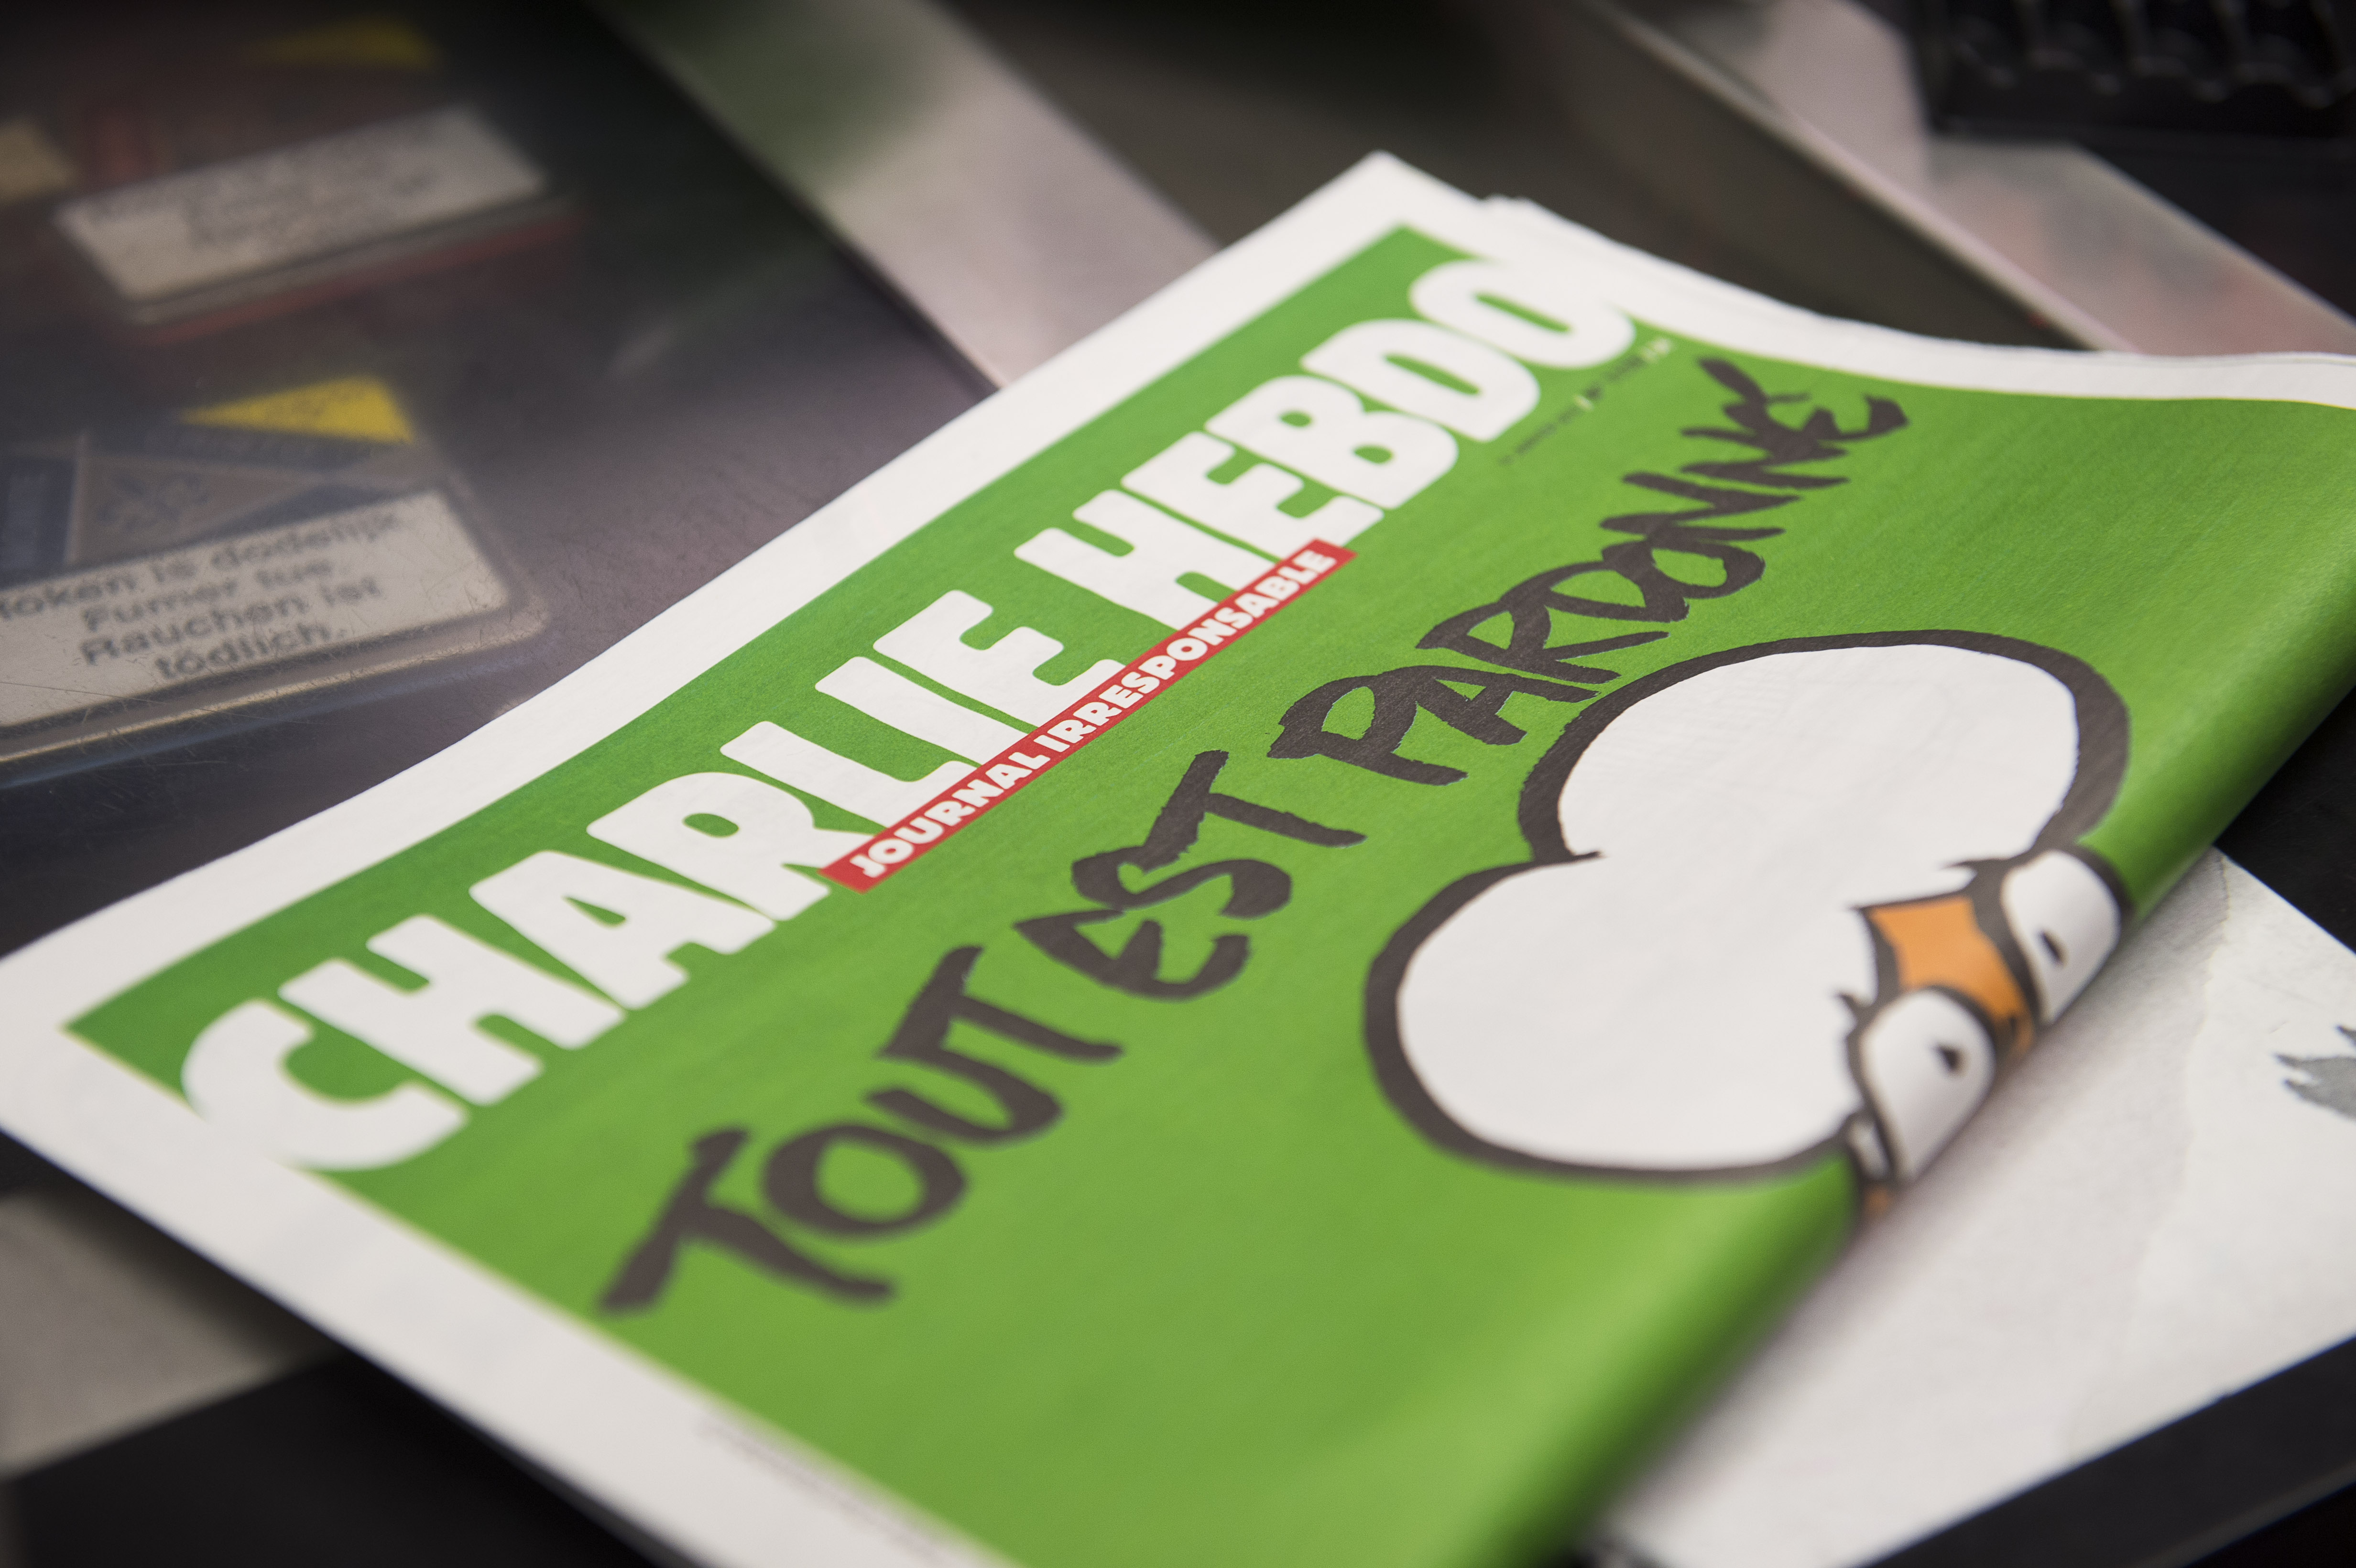 Журнал Charlie Hebdo